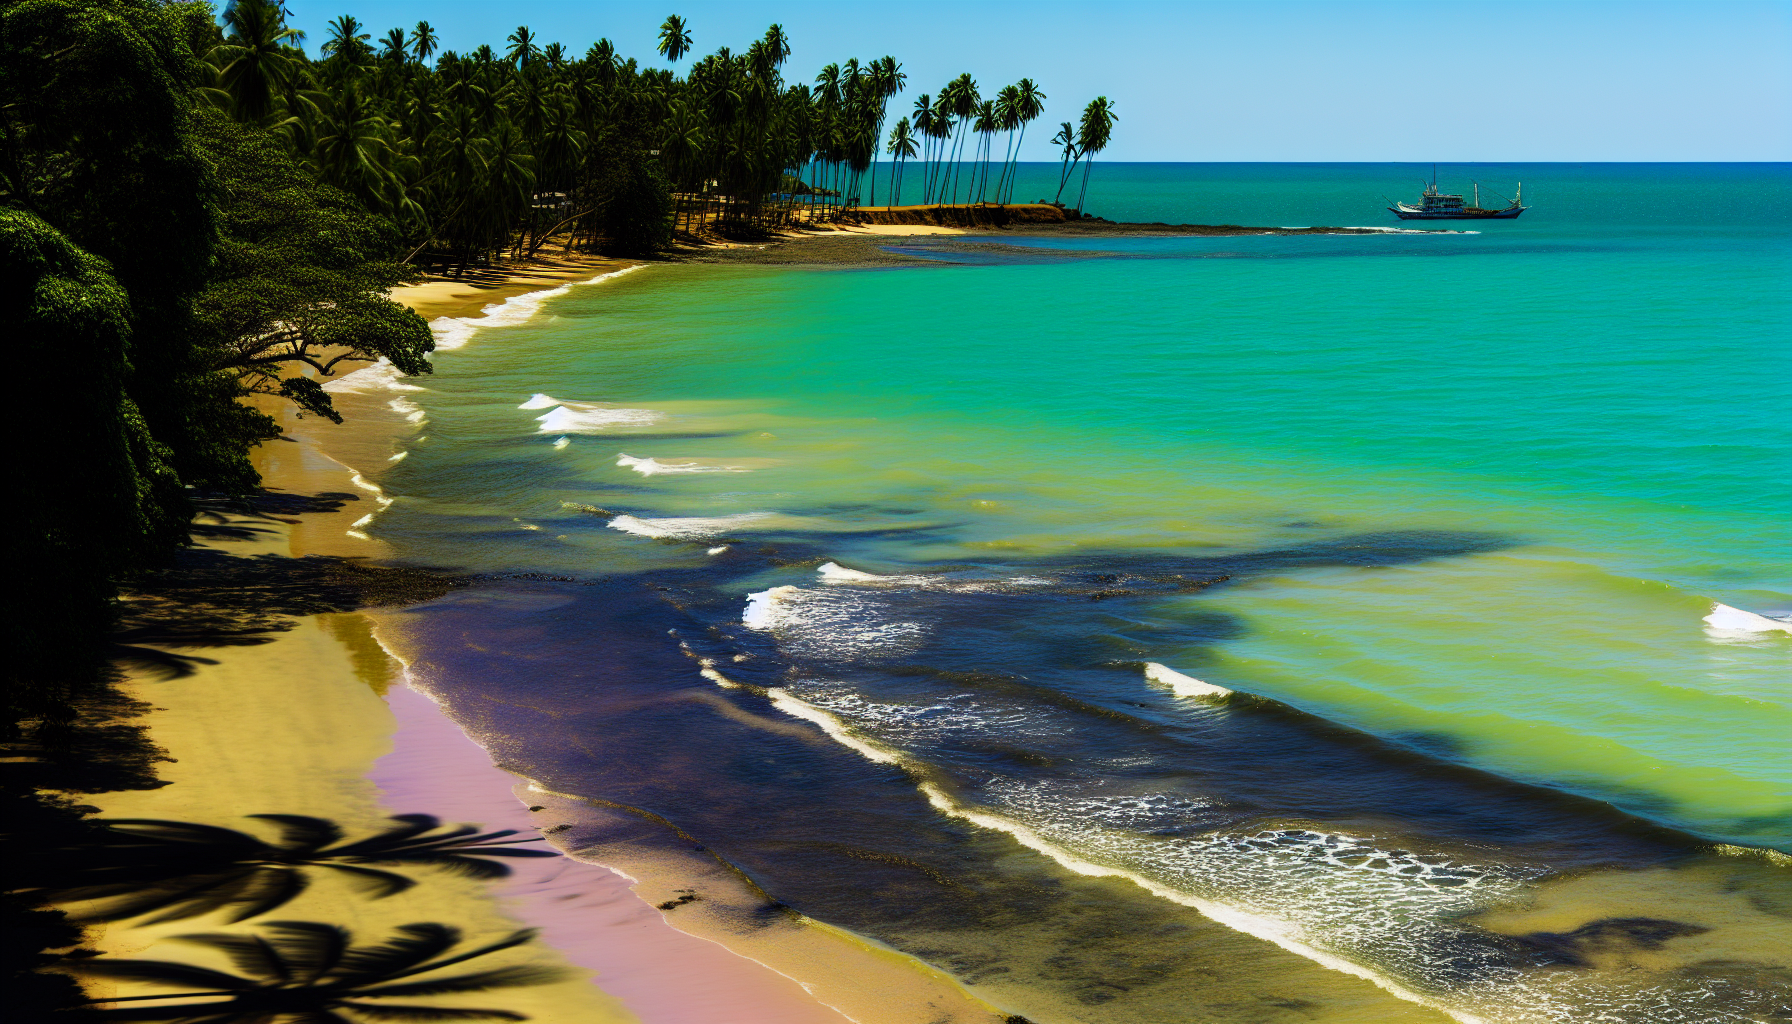 Palm-fringed shores of Samara Beach